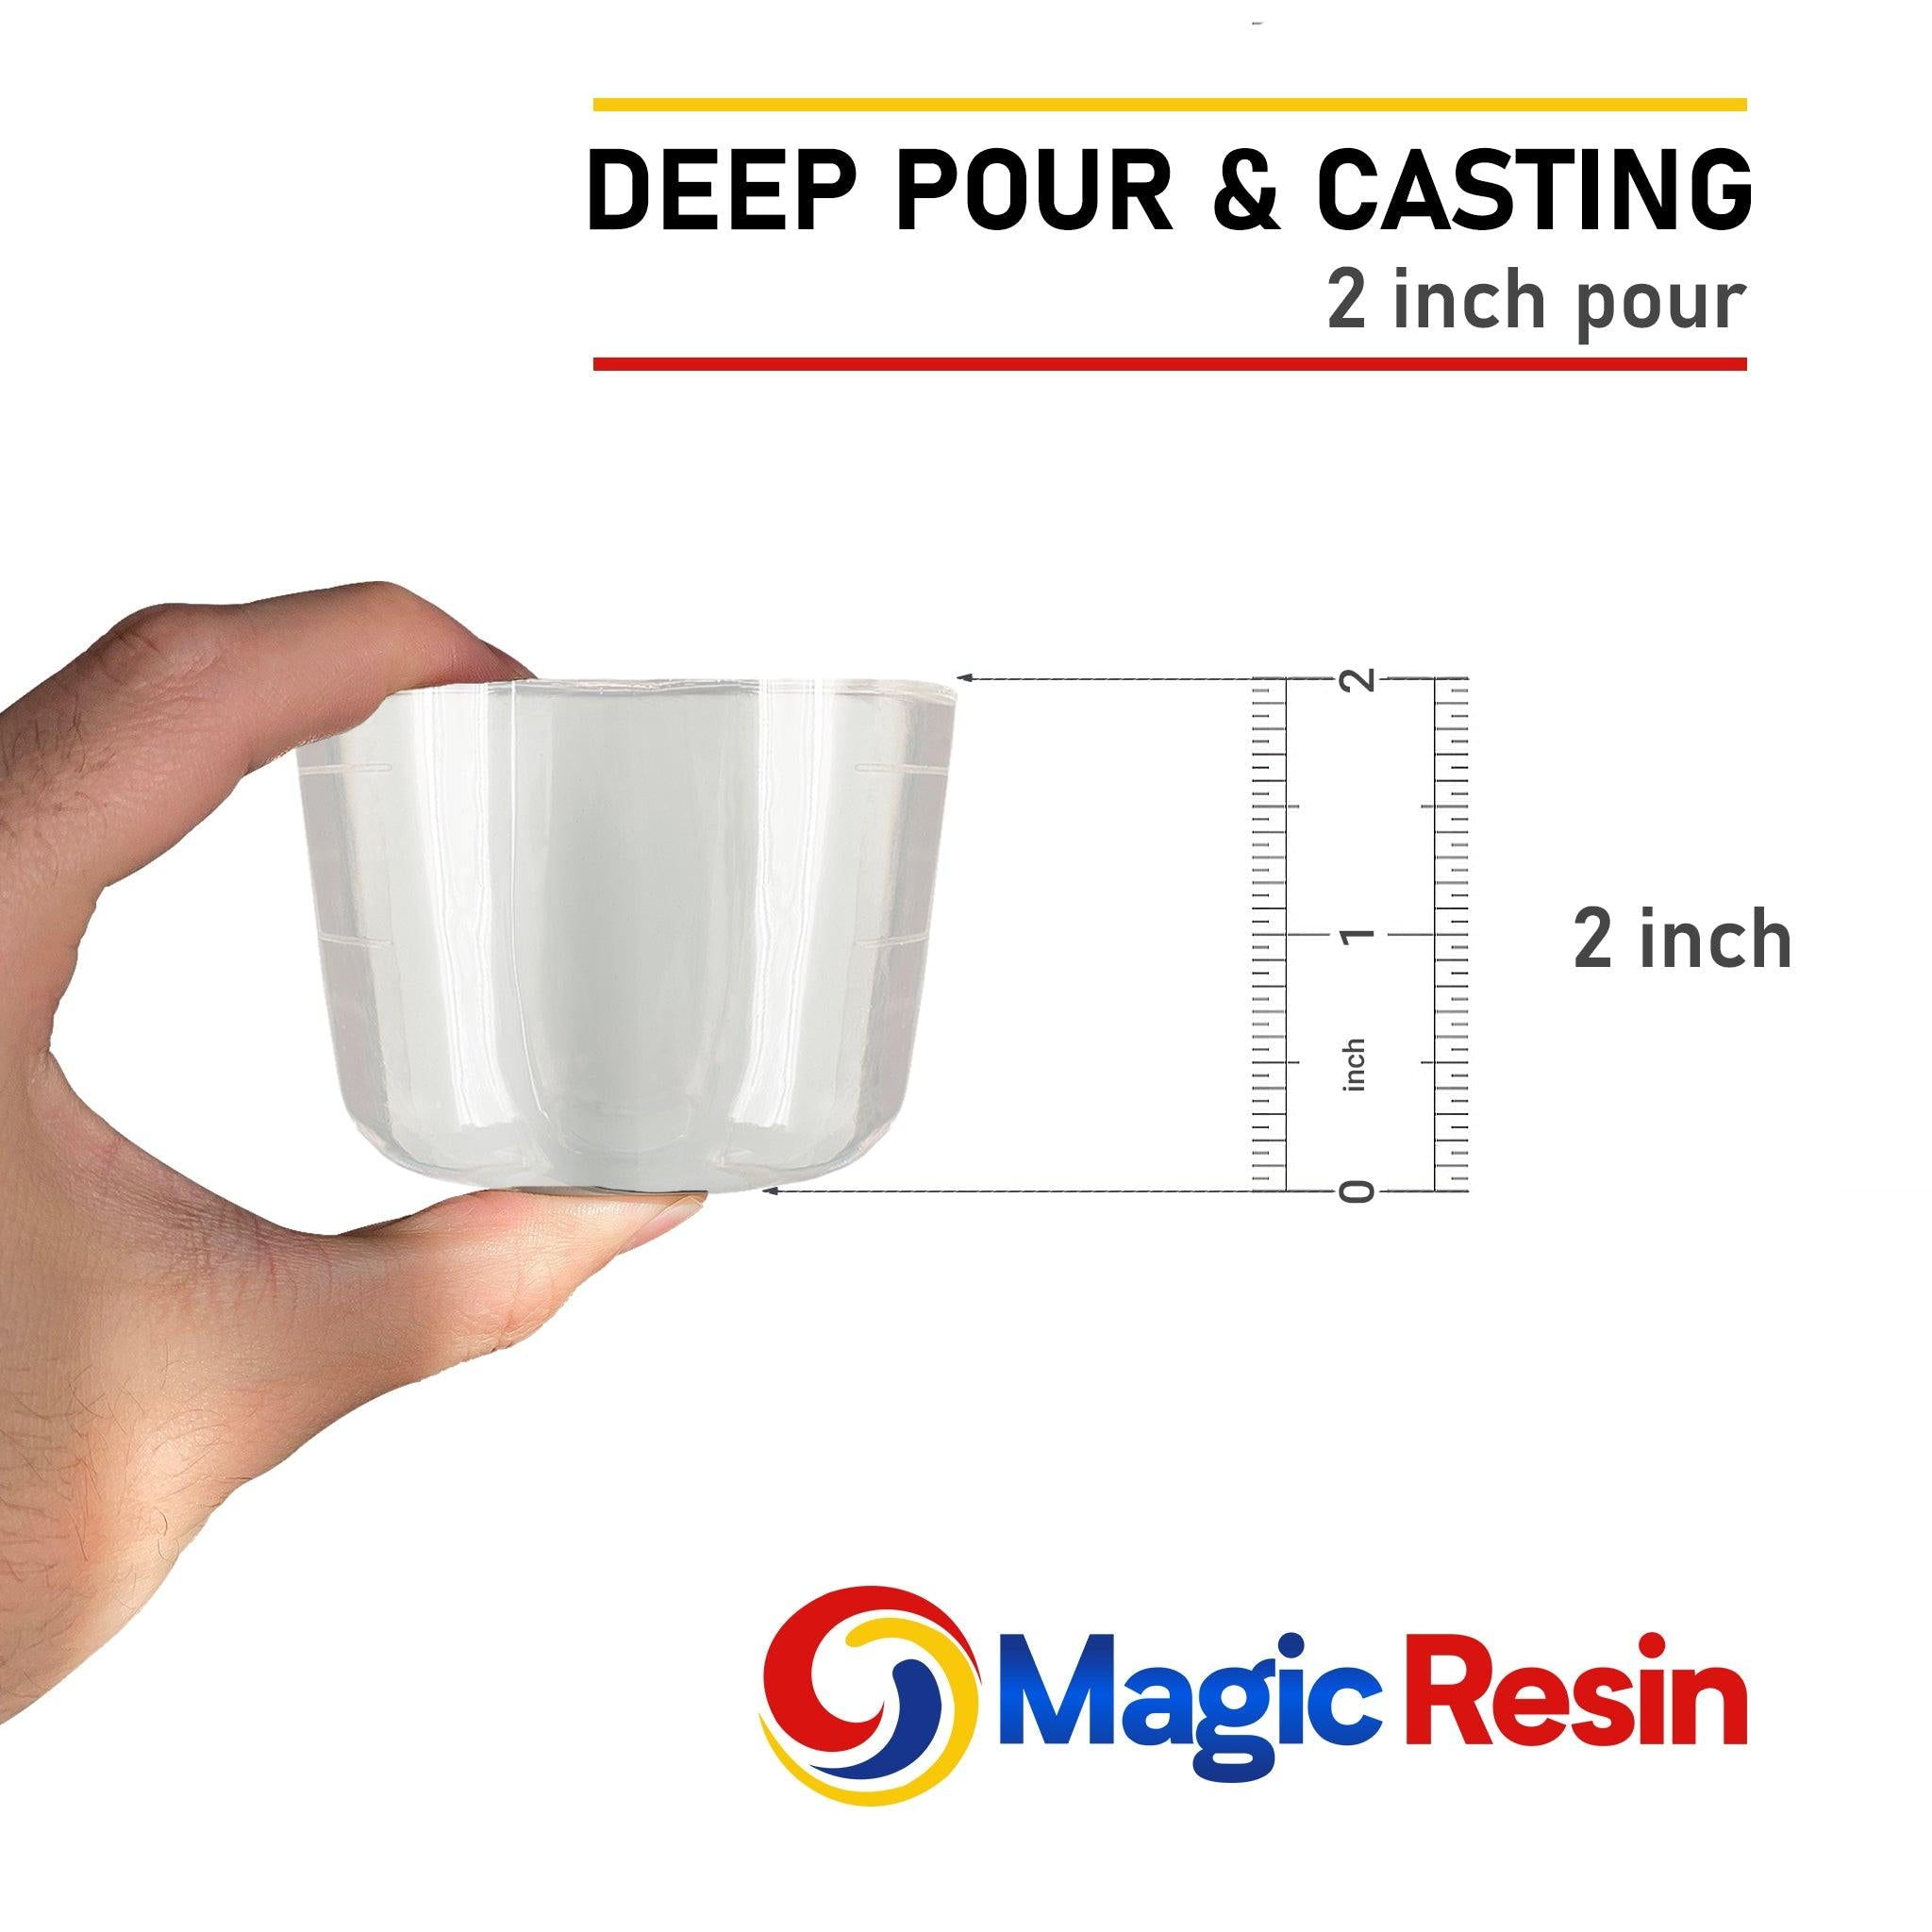 3 Gallon (11.4 L) | 2" Deep Pour, Casting & Art | Clear Epoxy Resin Kit | Free Shipping - Magic Resin USA